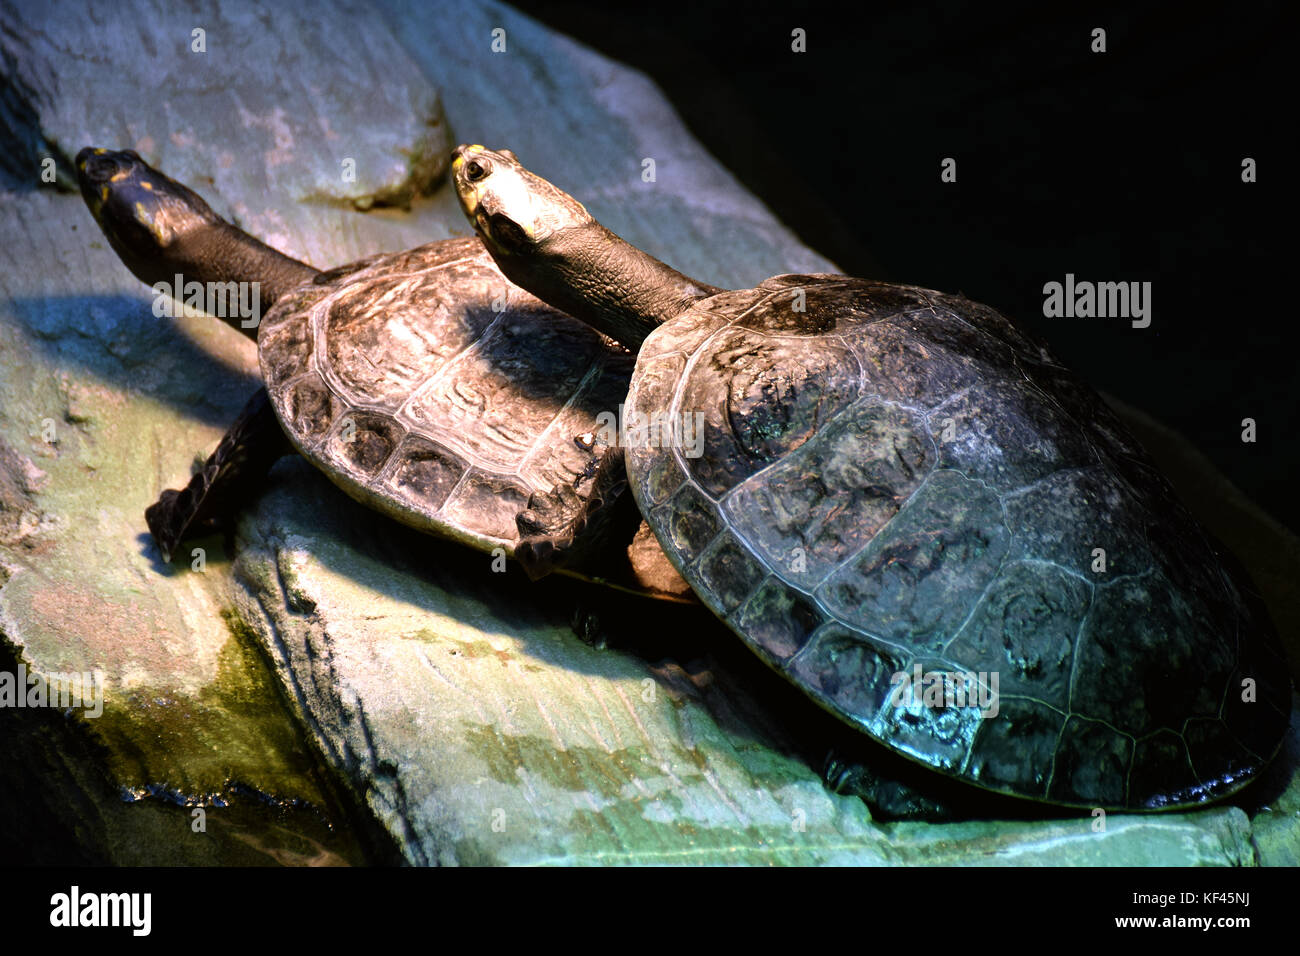 Yellow-spotted amazon river turtle (Podocnemis unifilis) Stock Photo